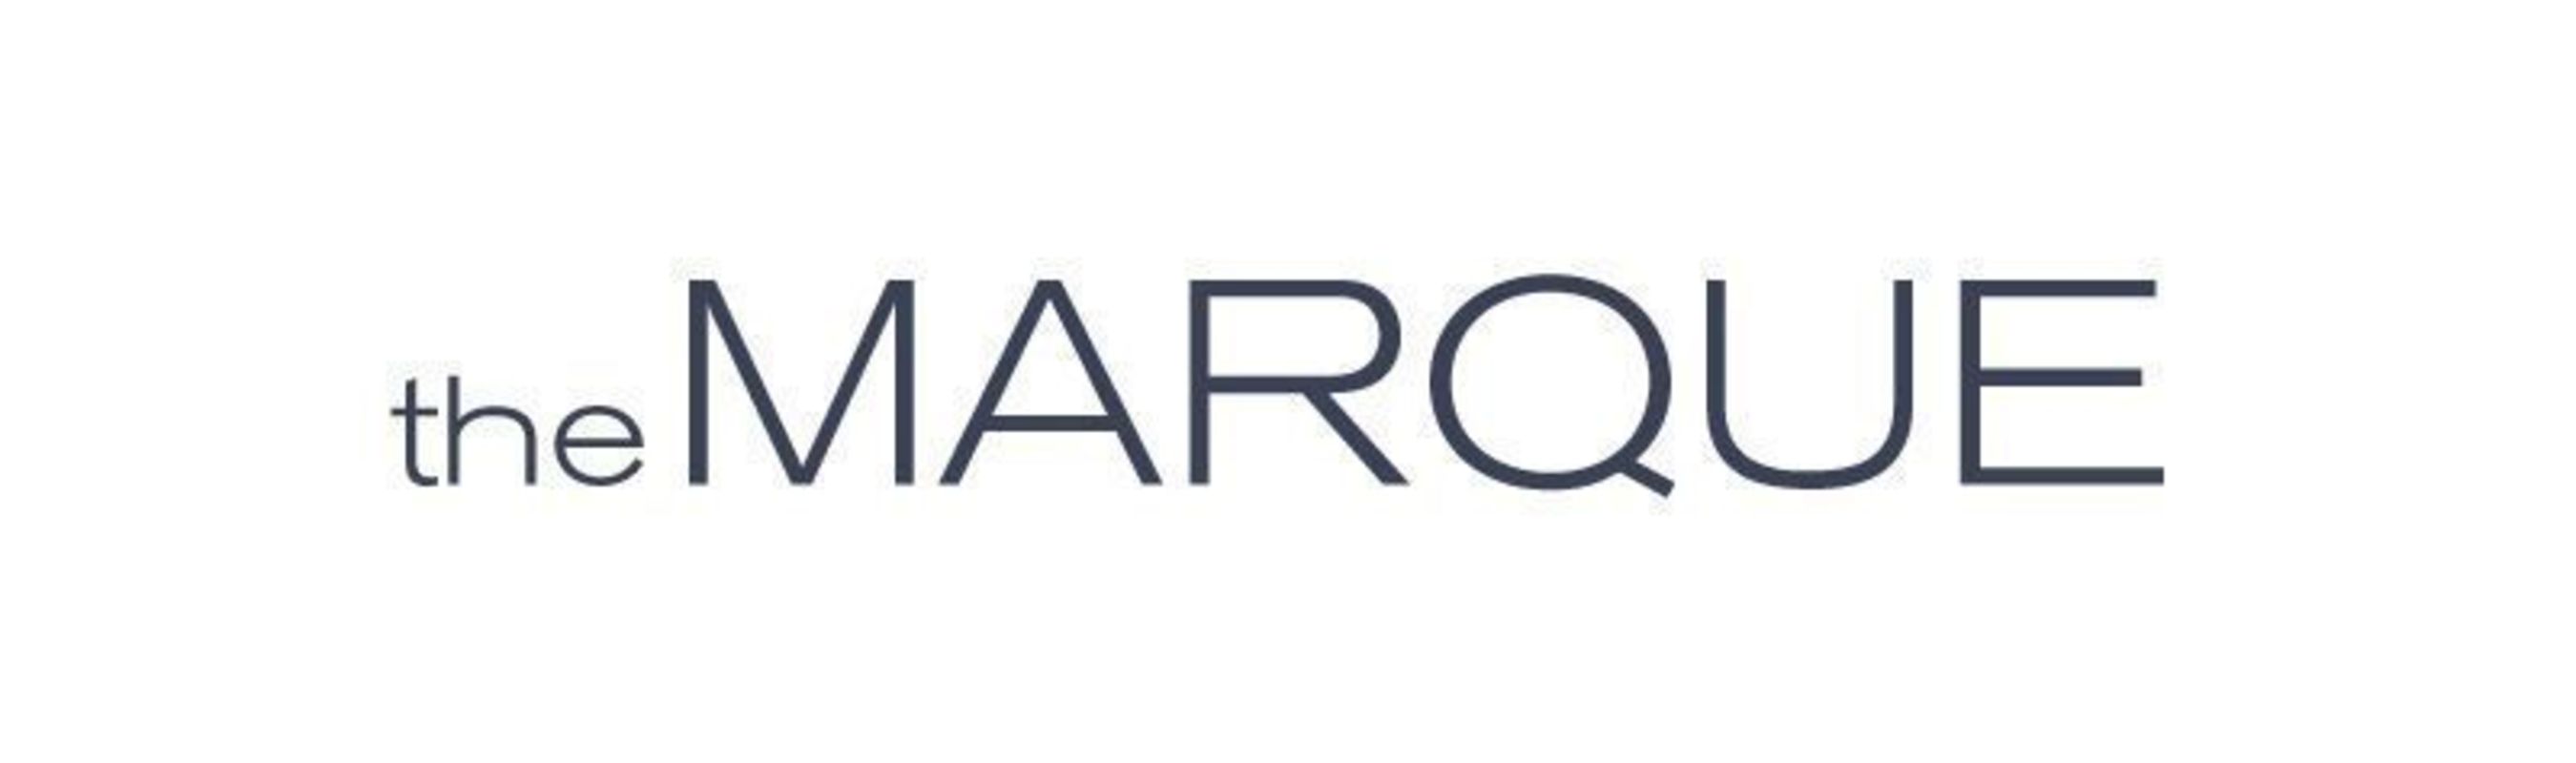 The Marque Logo (PRNewsFoto/The Marque)